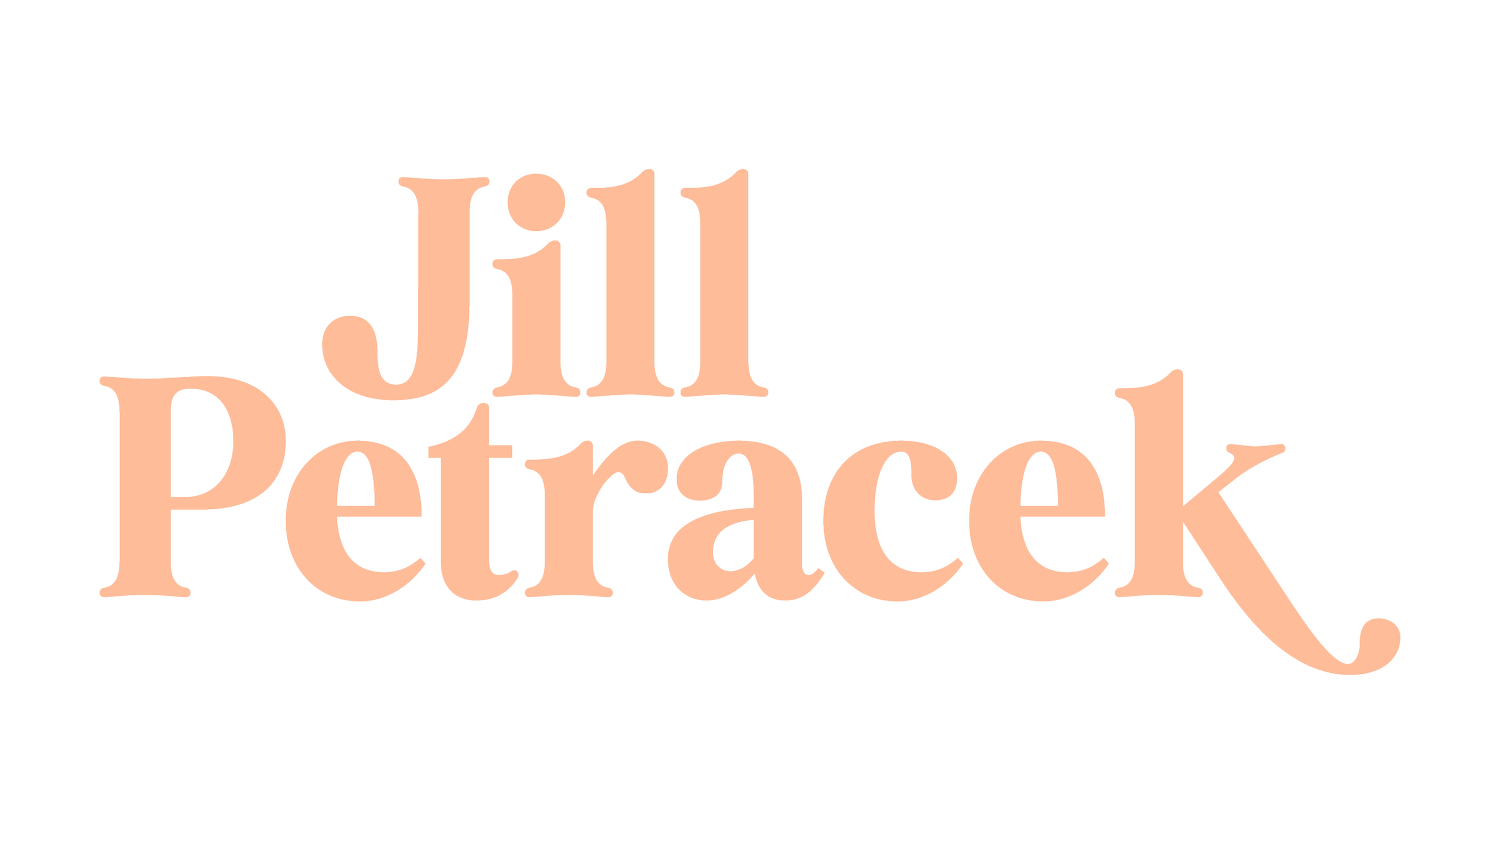 Jill Petracek